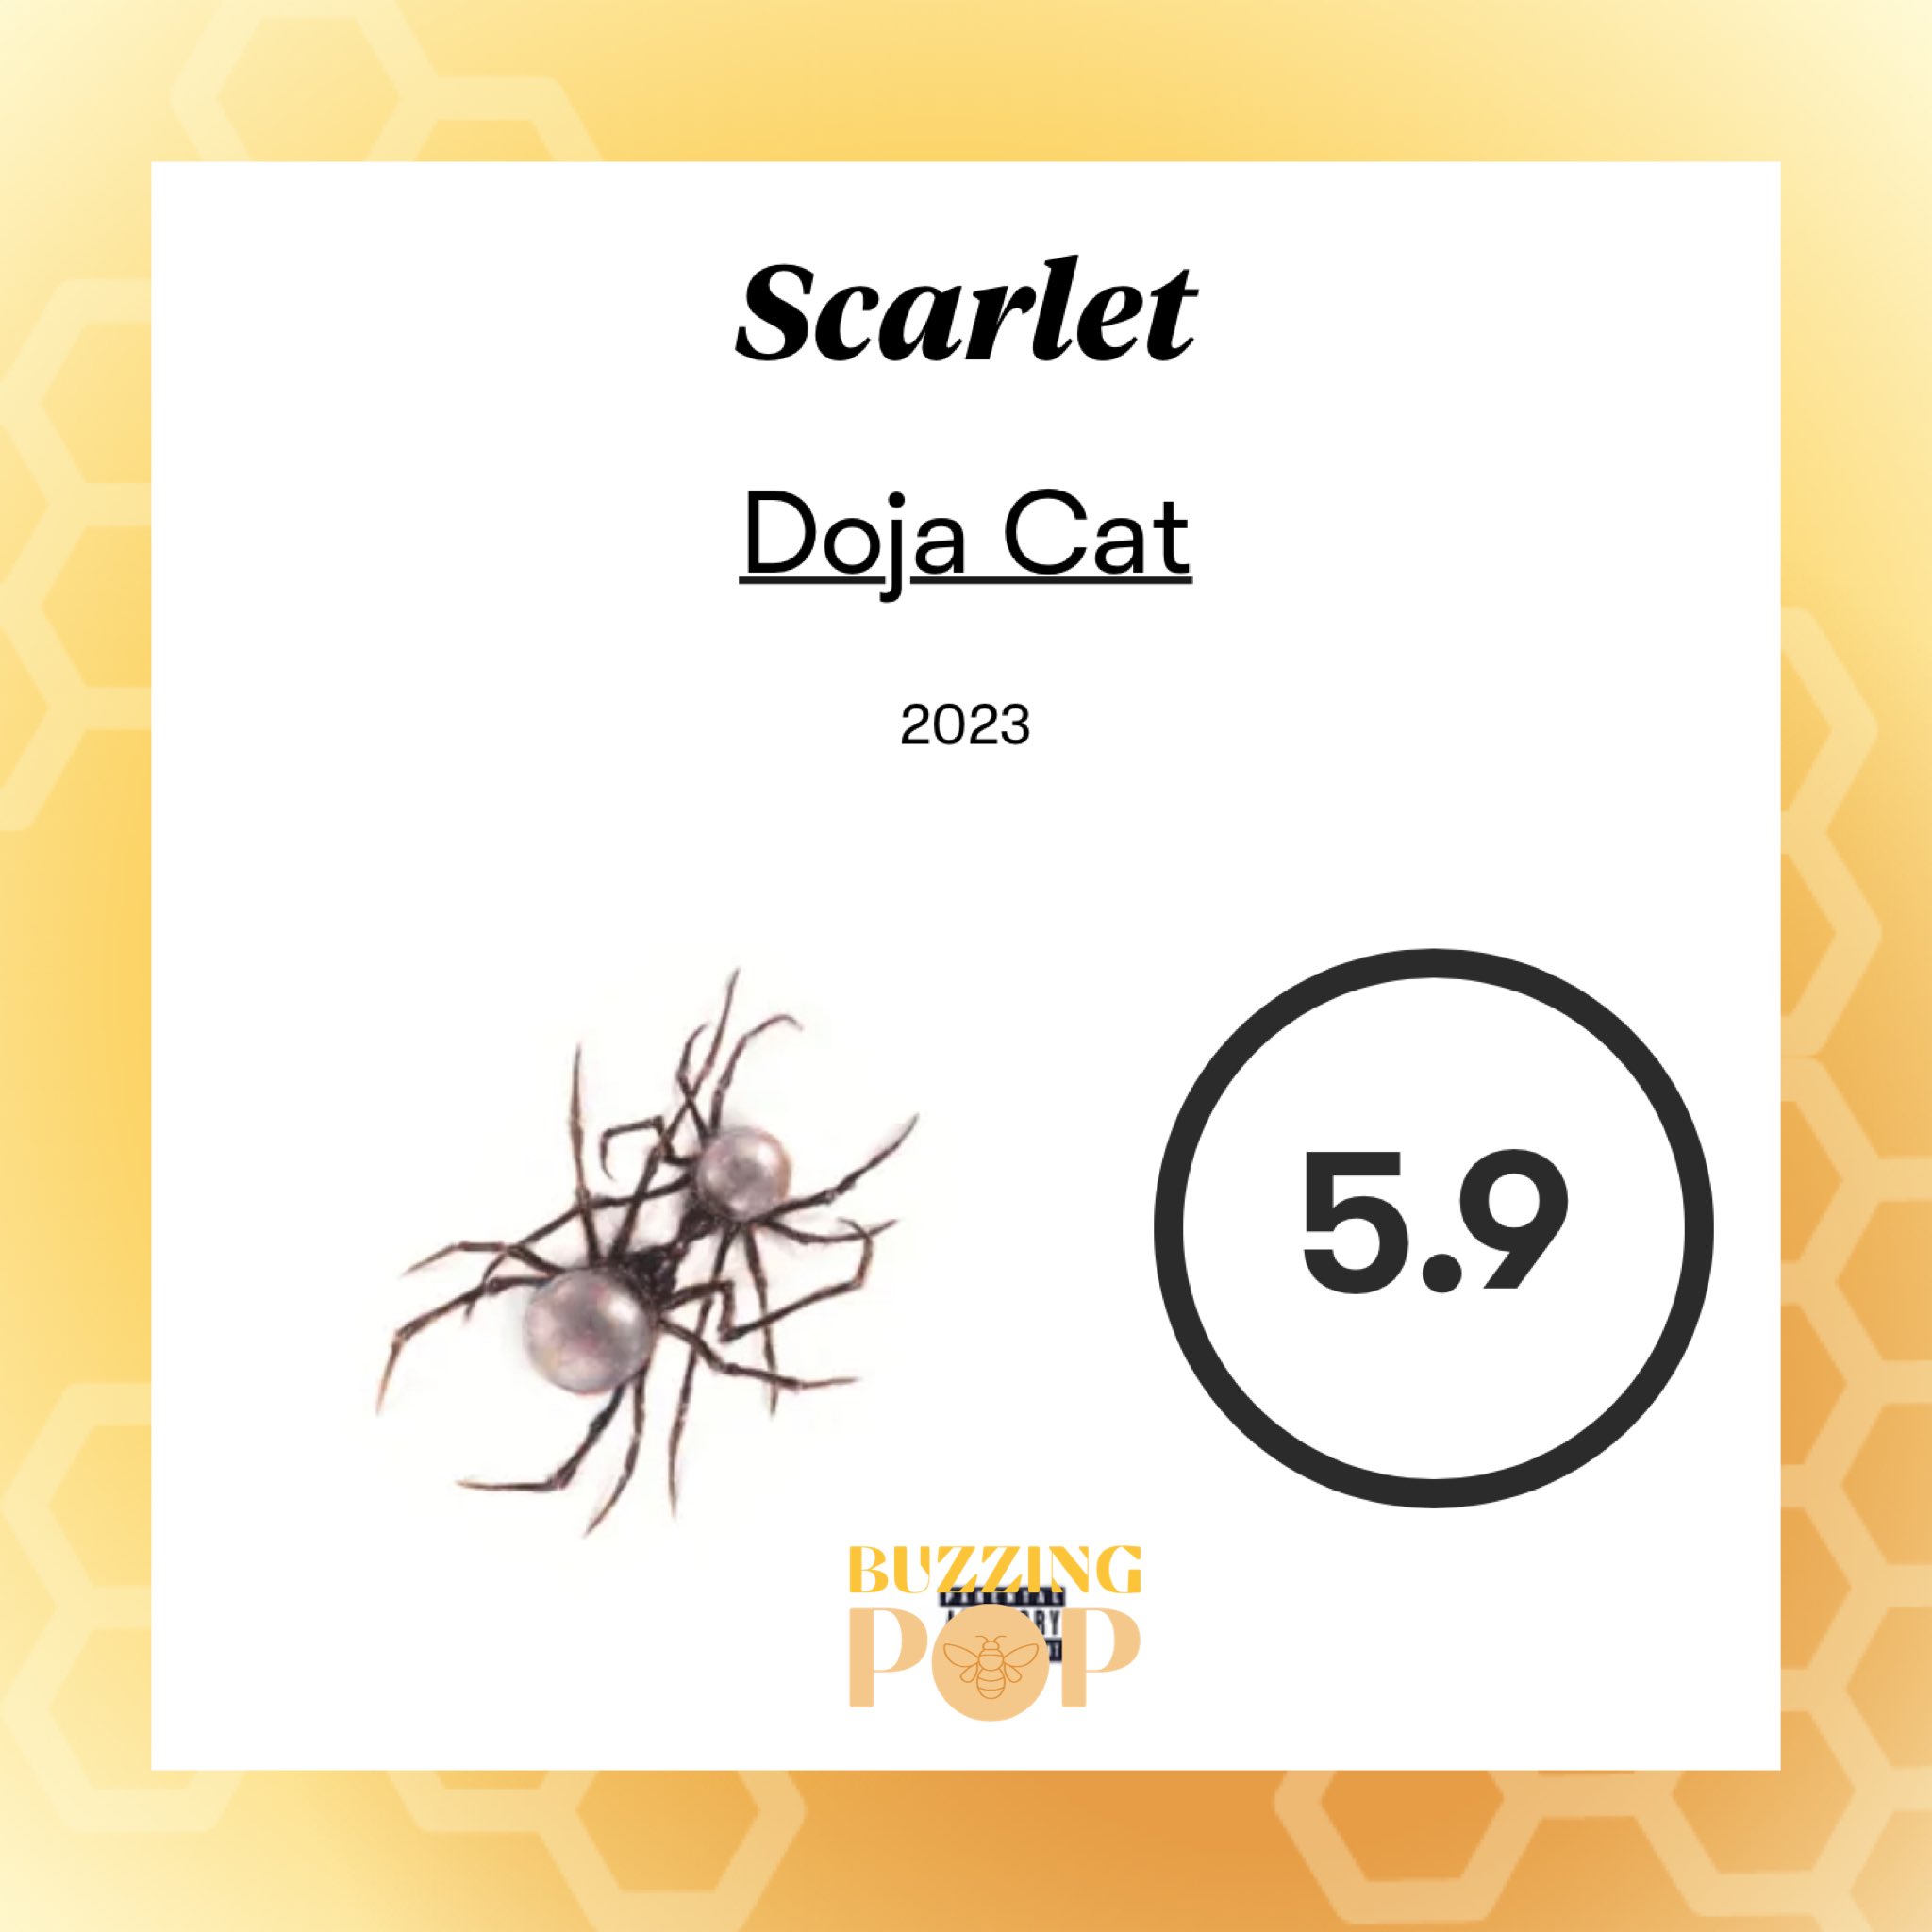 Doja Cat puts critics on blast on new album Scarlet